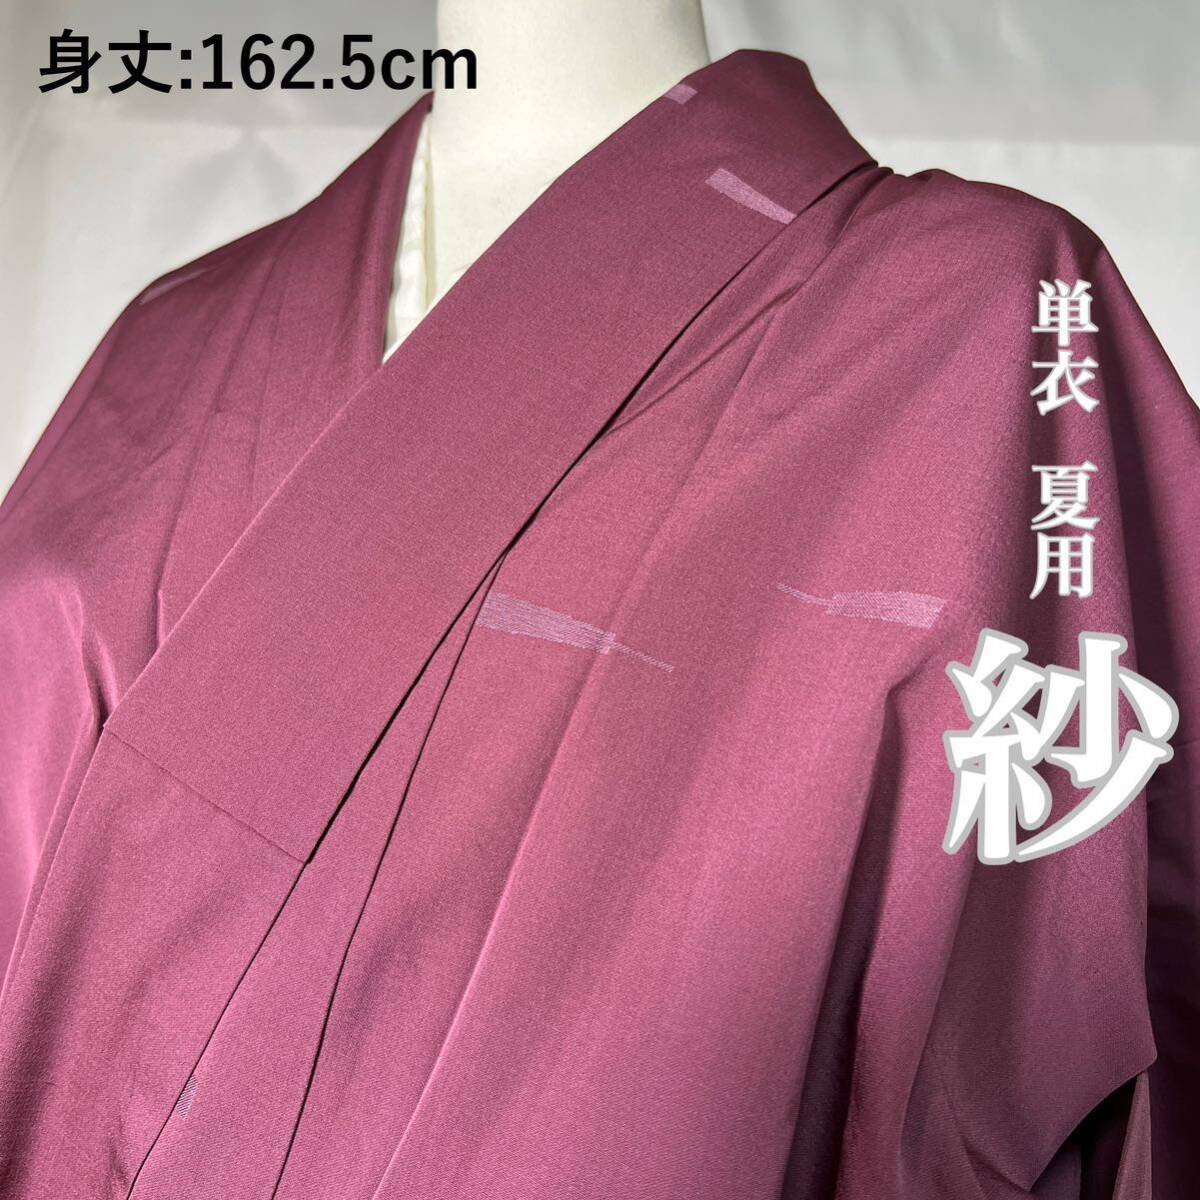 【wellriver】 単衣 夏用 着物 紗 正絹 袖 一部しつけ糸付 身丈162.5cm 上品 和服 和装 #B557！の画像1